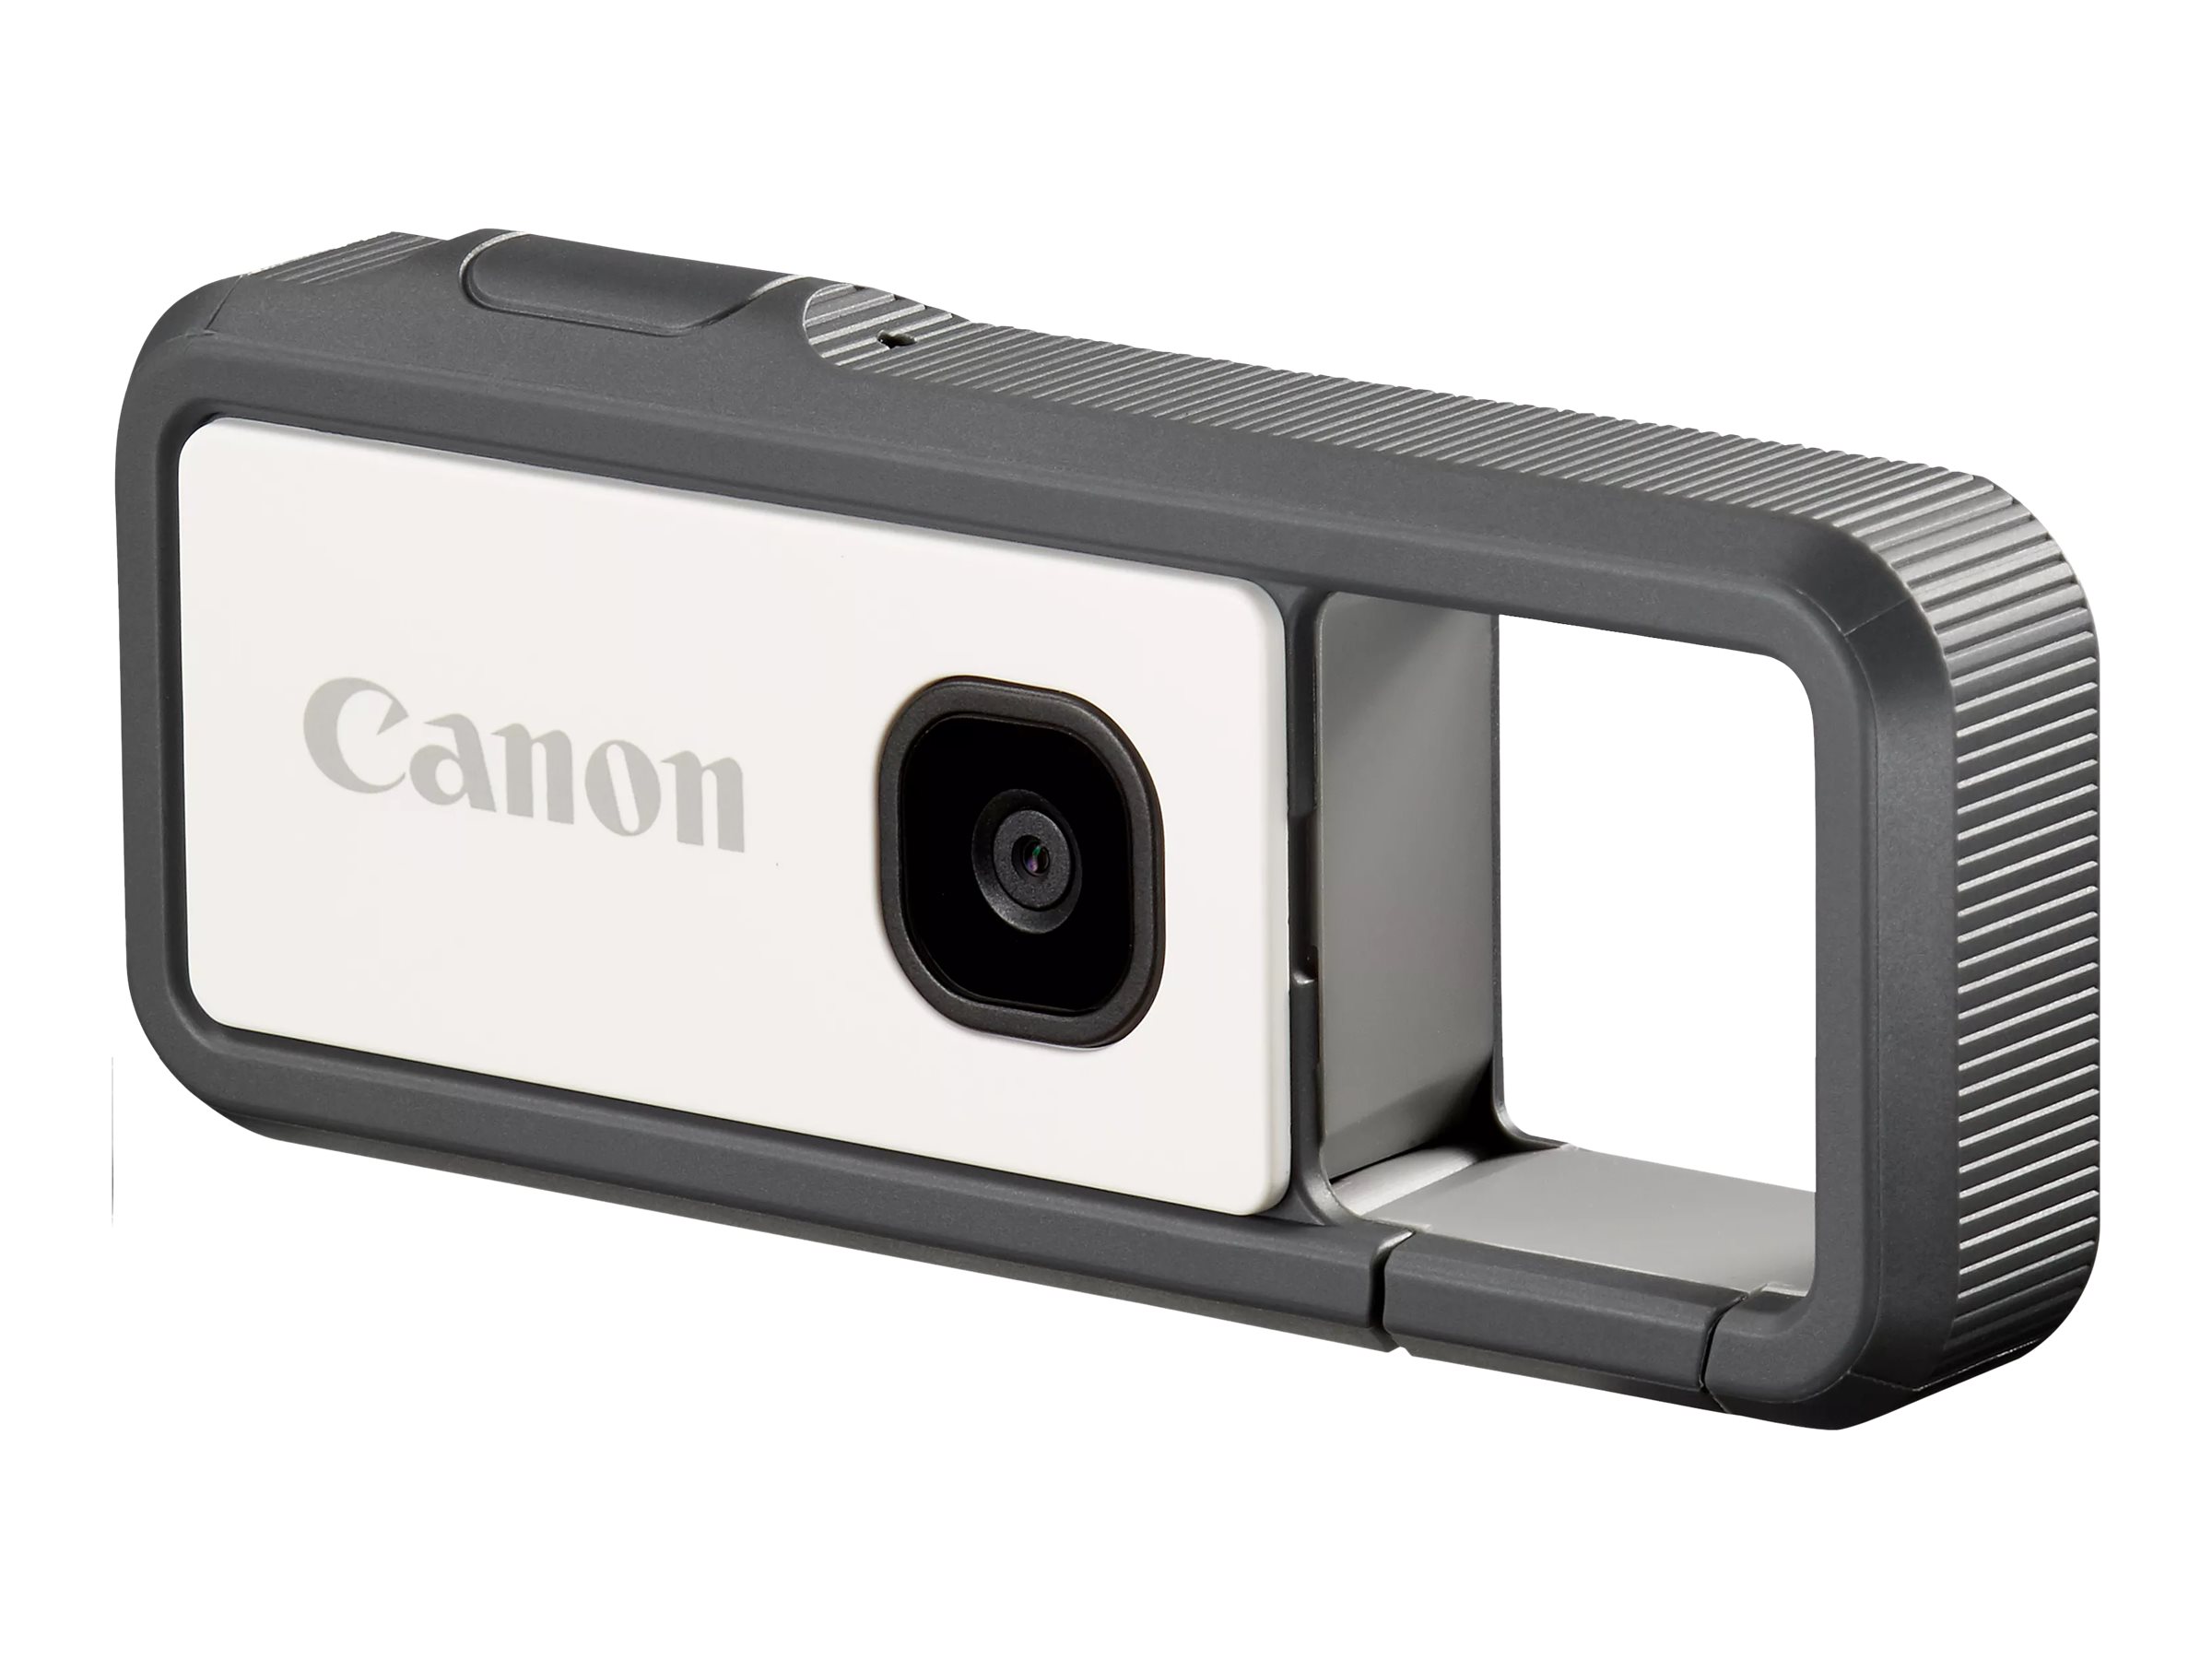 Canon IVY Mini Photo Printer - Slate Gray 